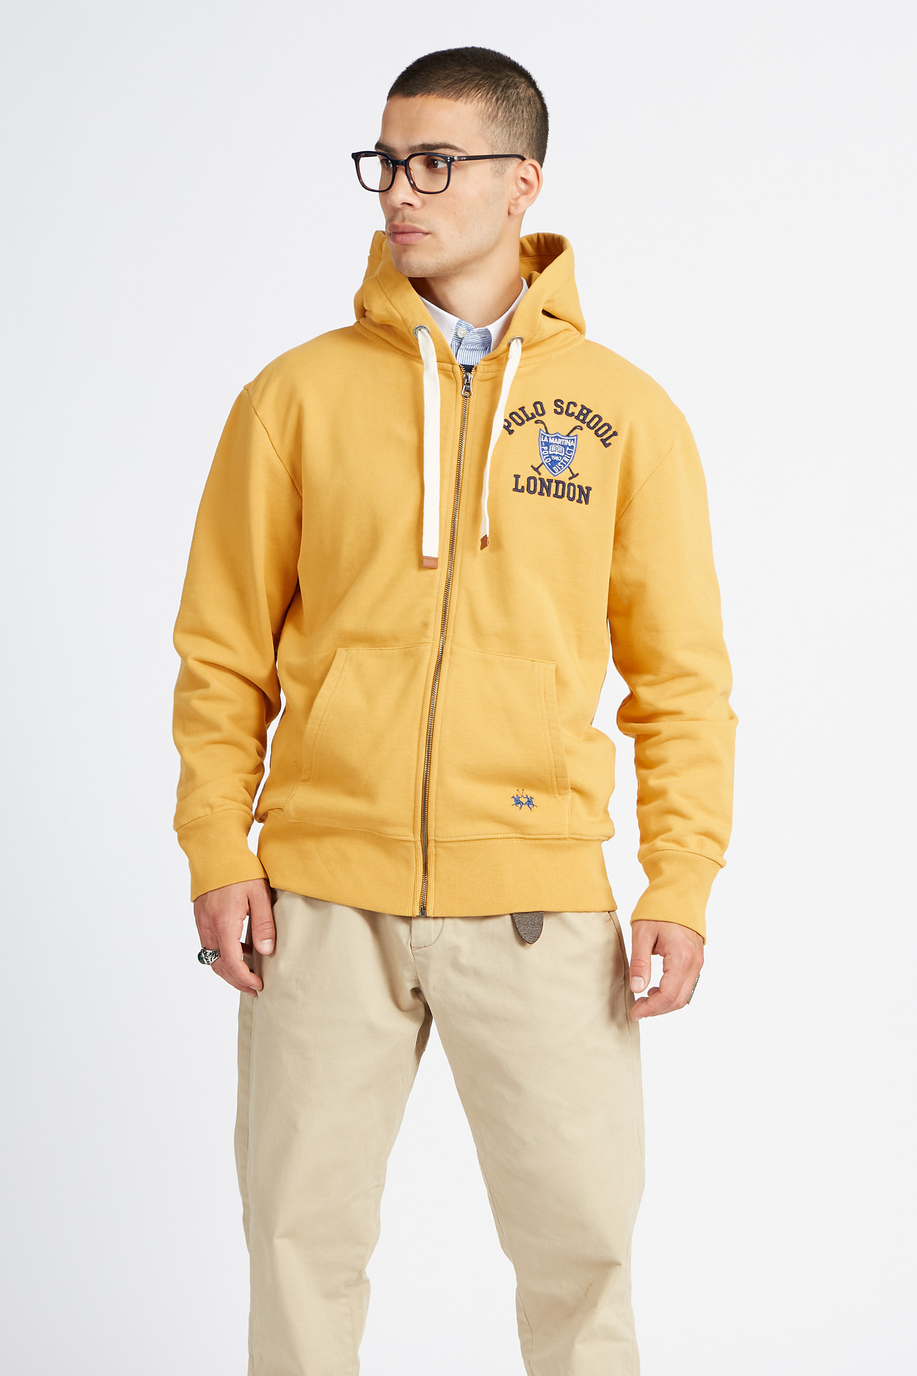 Polo Academy men's full zip hooded sweatshirt in solid color with small logo - Valoris - Knitwear & Sweatshirts | La Martina - Official Online Shop